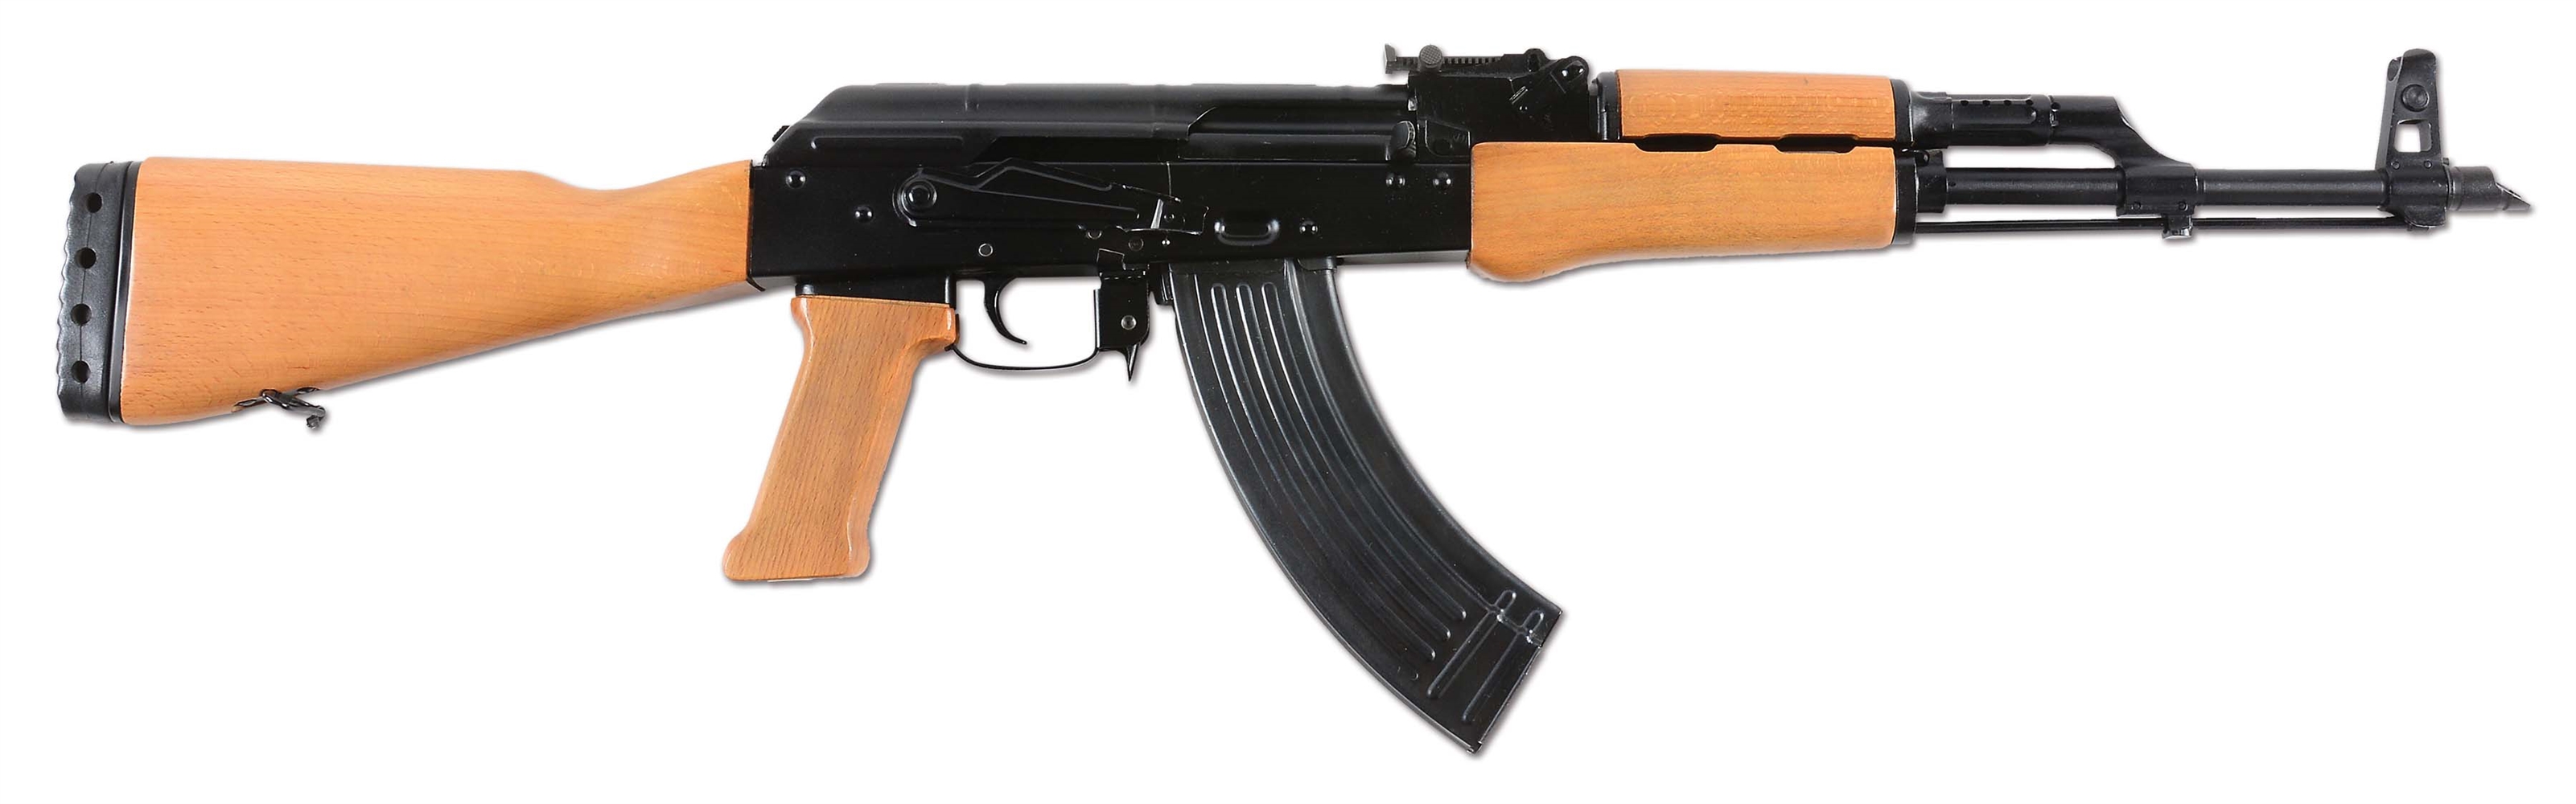 (N) WILSON REGISTERED AUTO SEAR IN NEAR MINT UNFIRED HUNGARIAN SA 85M (AK-47 COPY) MACHINE GUN (FULLY TRANSFERABLE).